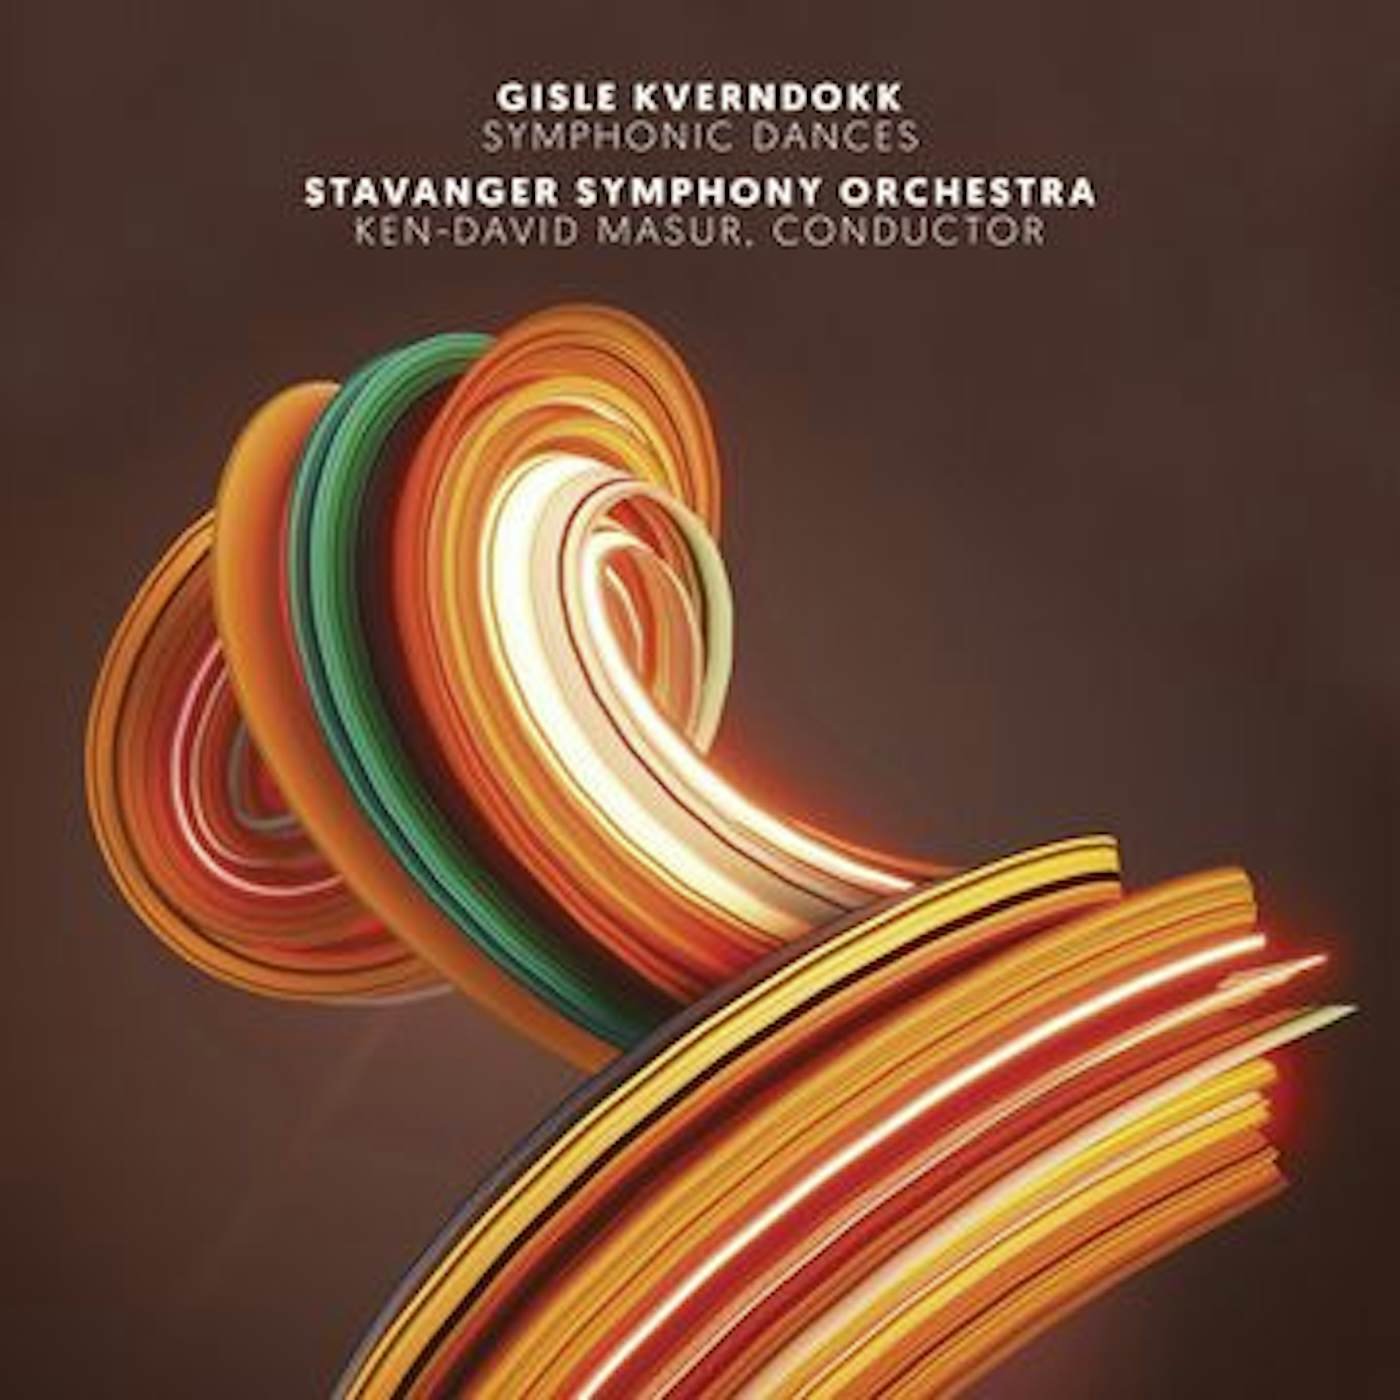 Stavanger Symphony Orchestra Gisle Kverndokk Symphonic Dances Vinyl Record